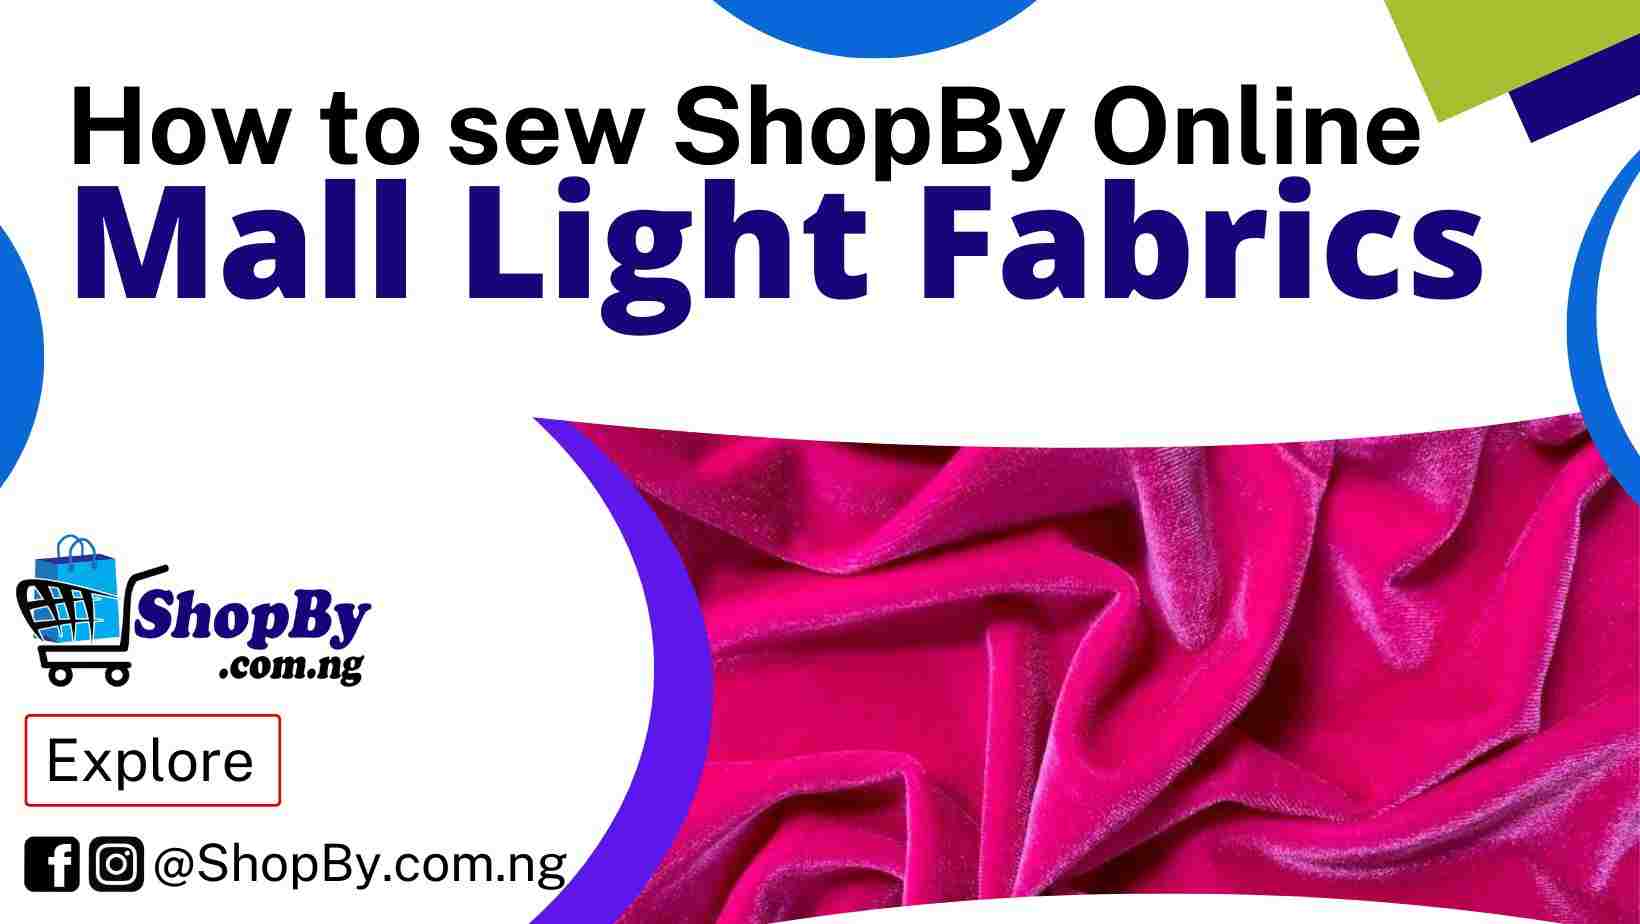 How to sew ShopBy Online Mall Light Fabrics